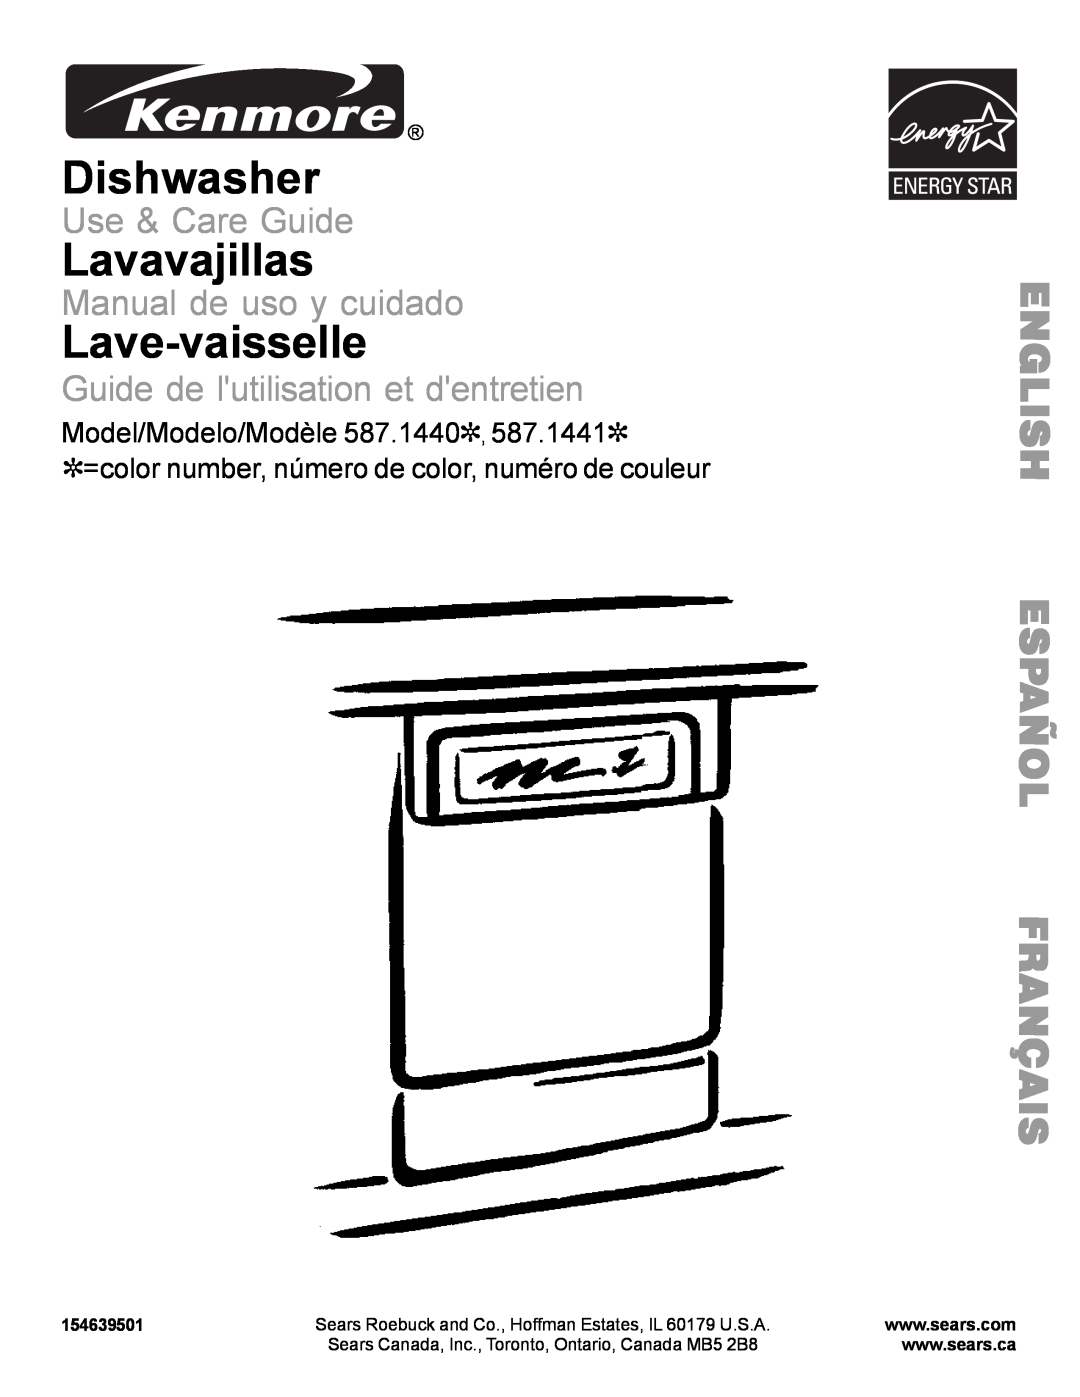 Kenmore 587.144 manual English Español Français, Dishwasher, Lavavajillas, Lave-vaisselle, Use & Care Guide, 154639501 